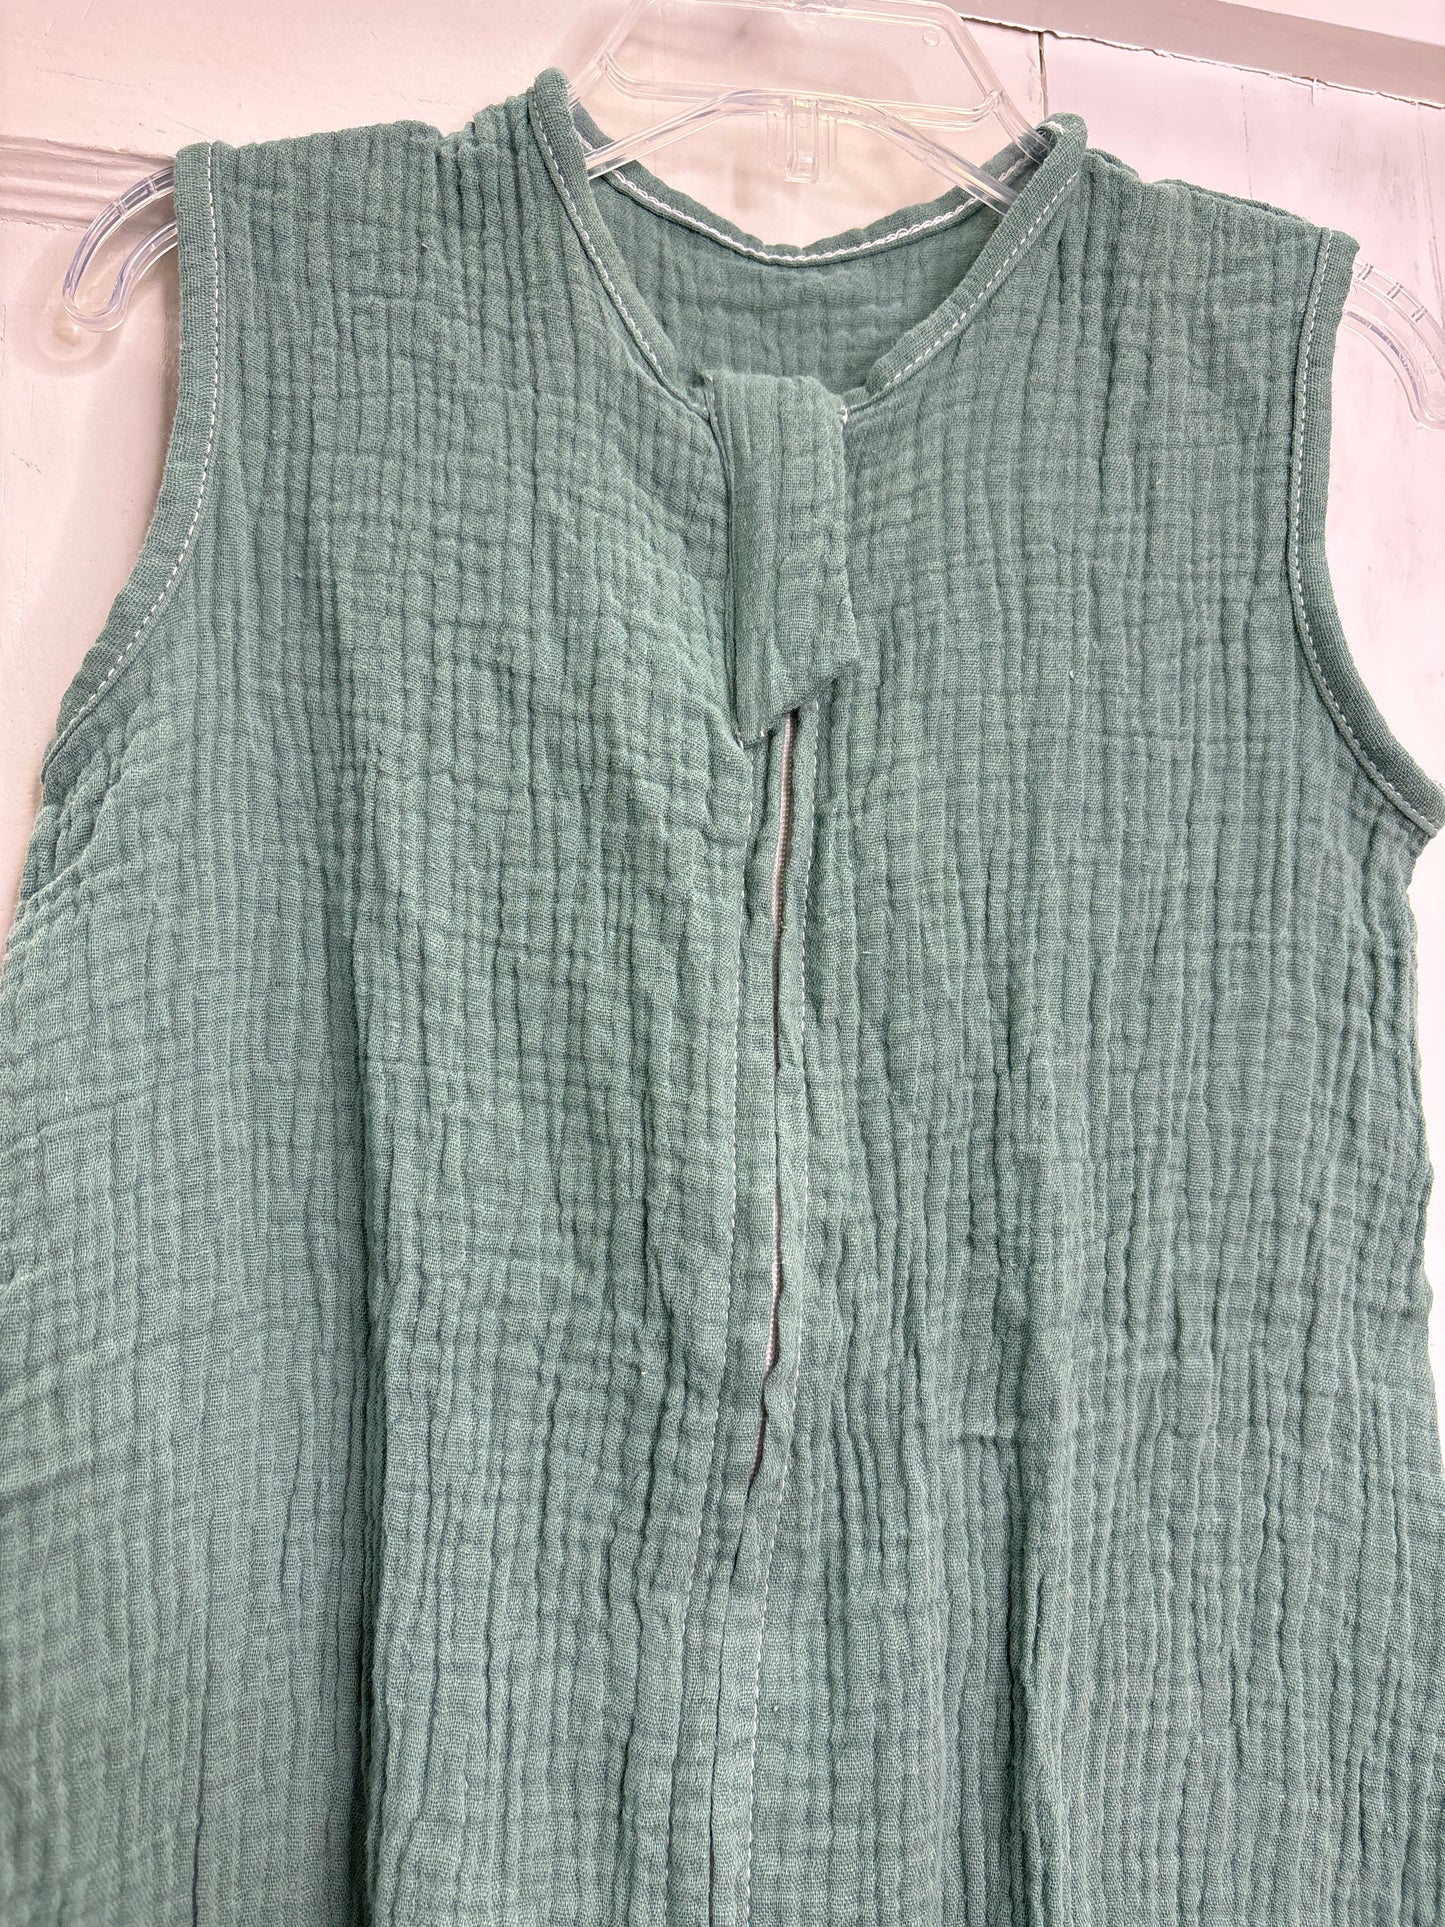 Muslin cotton, baby gown sage green